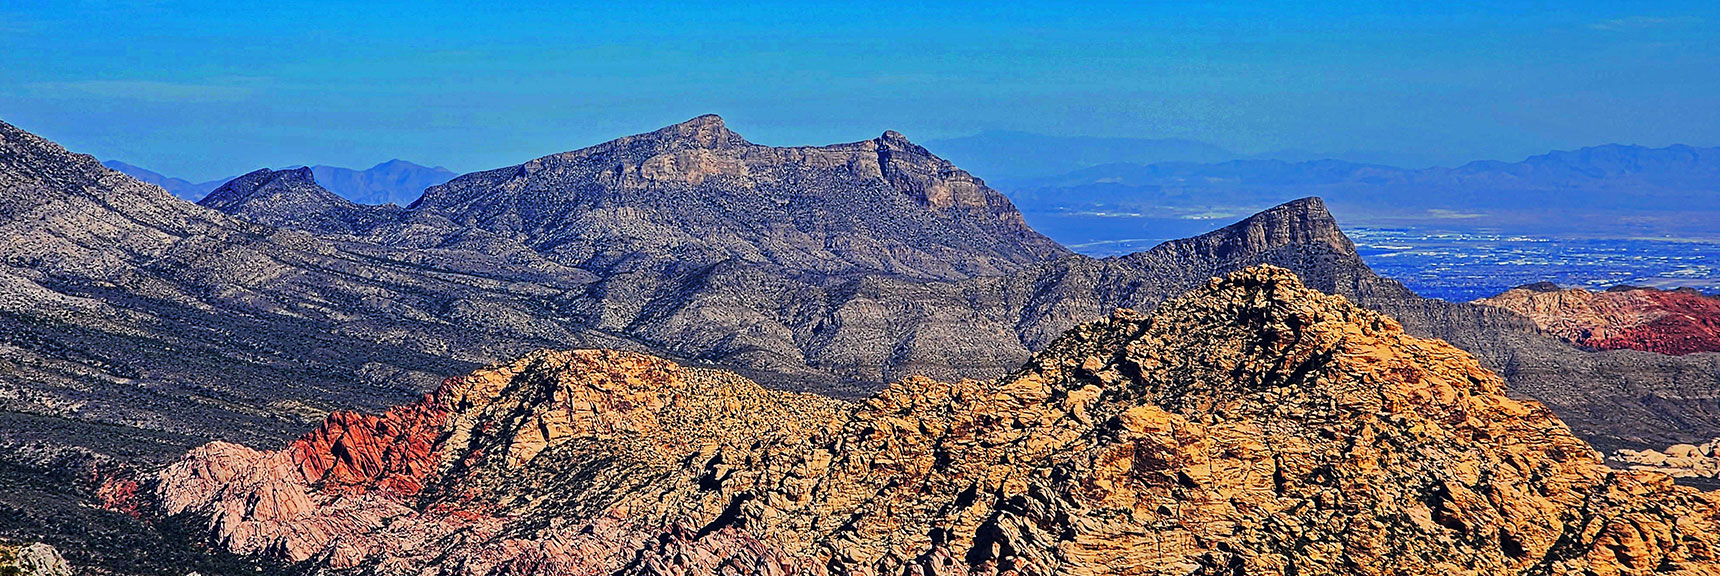 Damsel Peak (left), Turtlehead Peak (right), White Rock Mt. (middle foreground) | Switchback Spring Pinnacle | Wilson Ridge | Lovell Canyon, Nevada